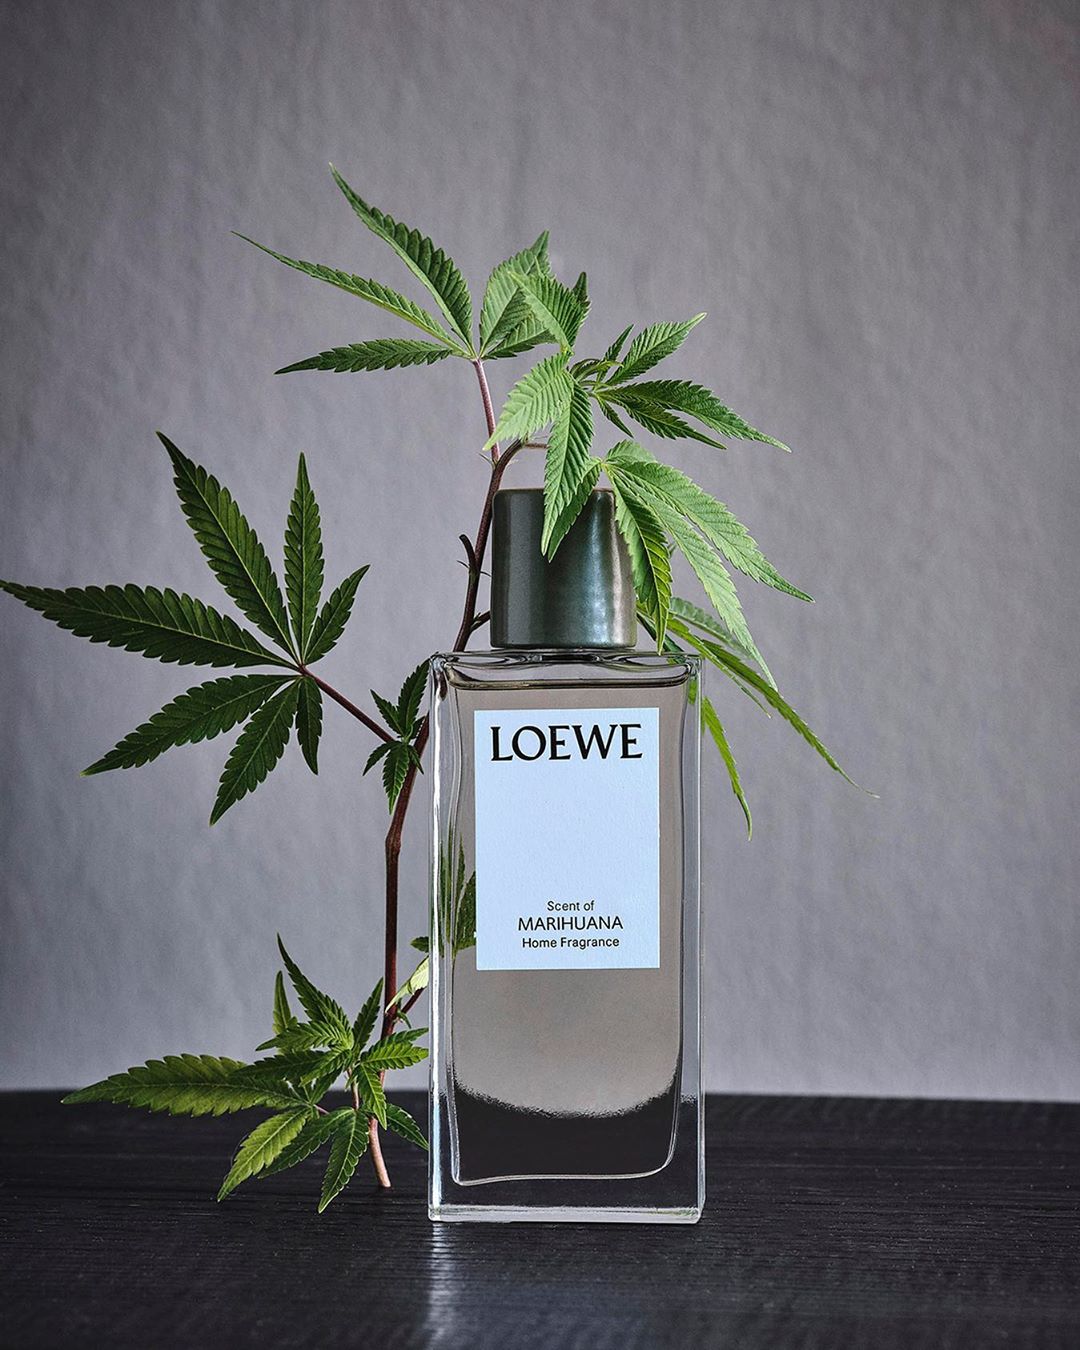 LOEWE - Scent of Marihuana (Cannabis sativa) room spray
 
Now available on loewe.com
 
#LOEWE #LOEWEperfumes